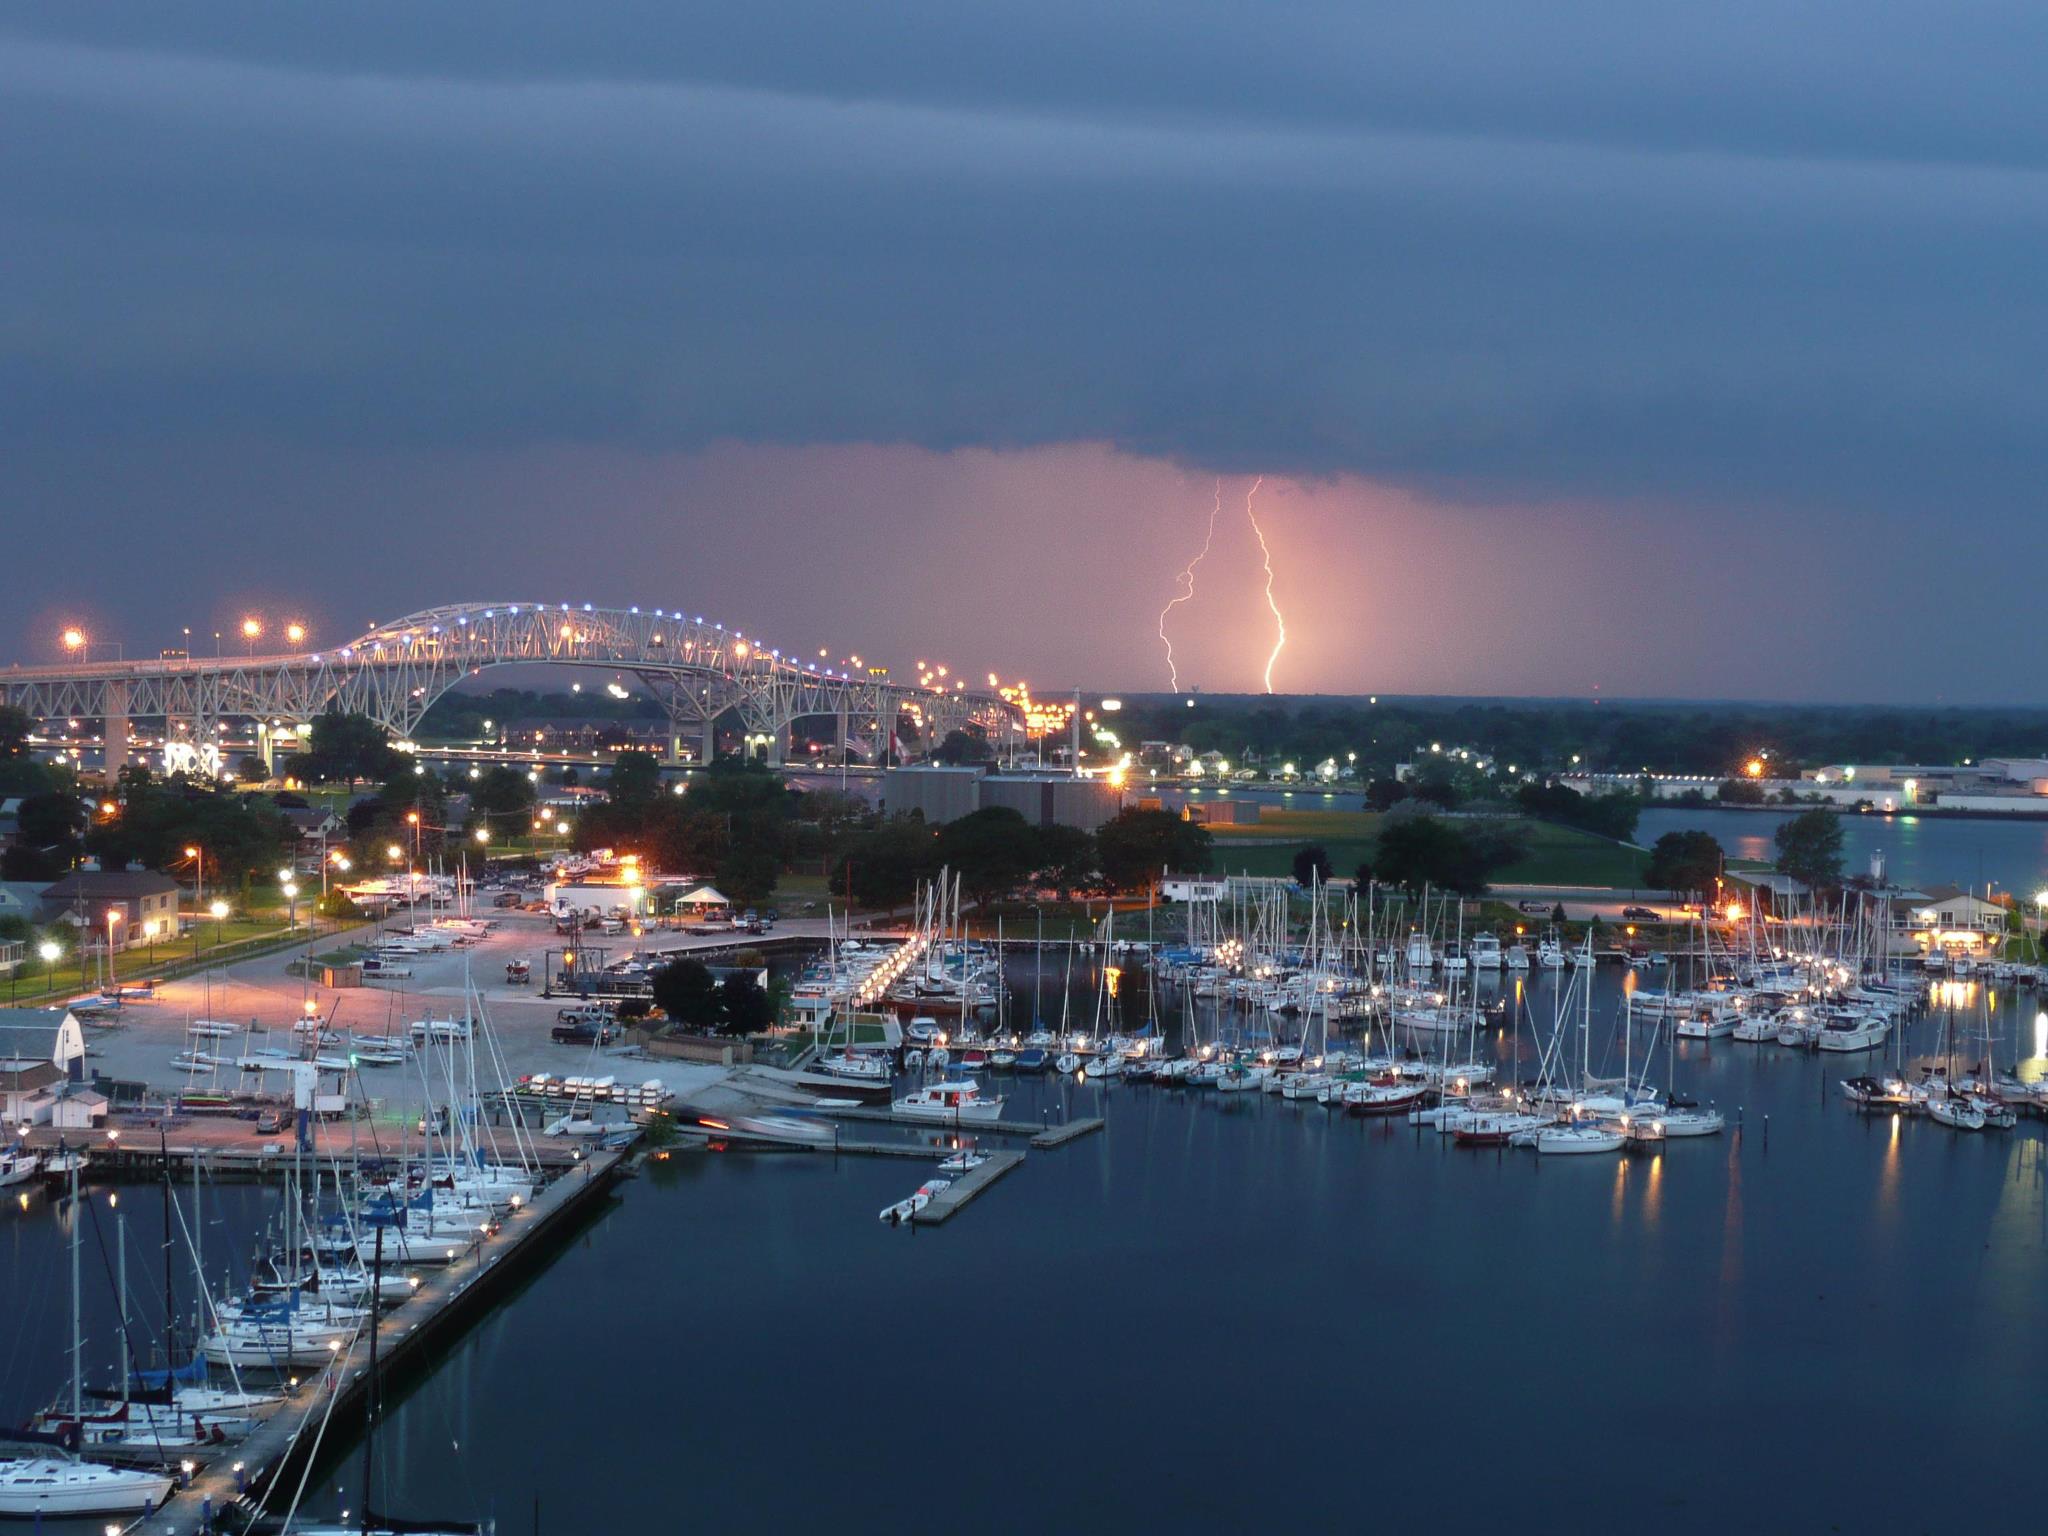 lightning over the yacht club